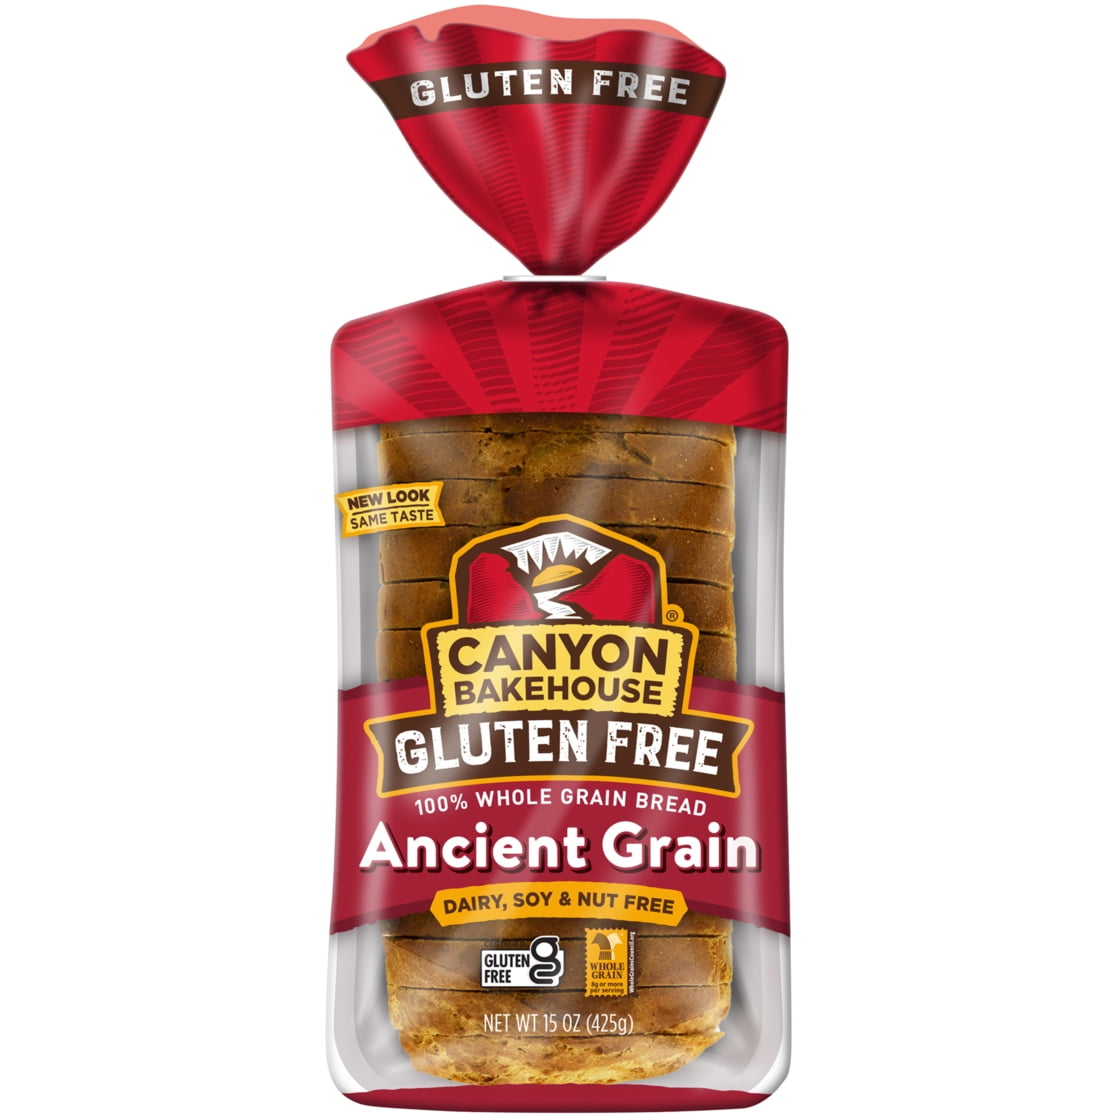 Bread gluten free 17 Best